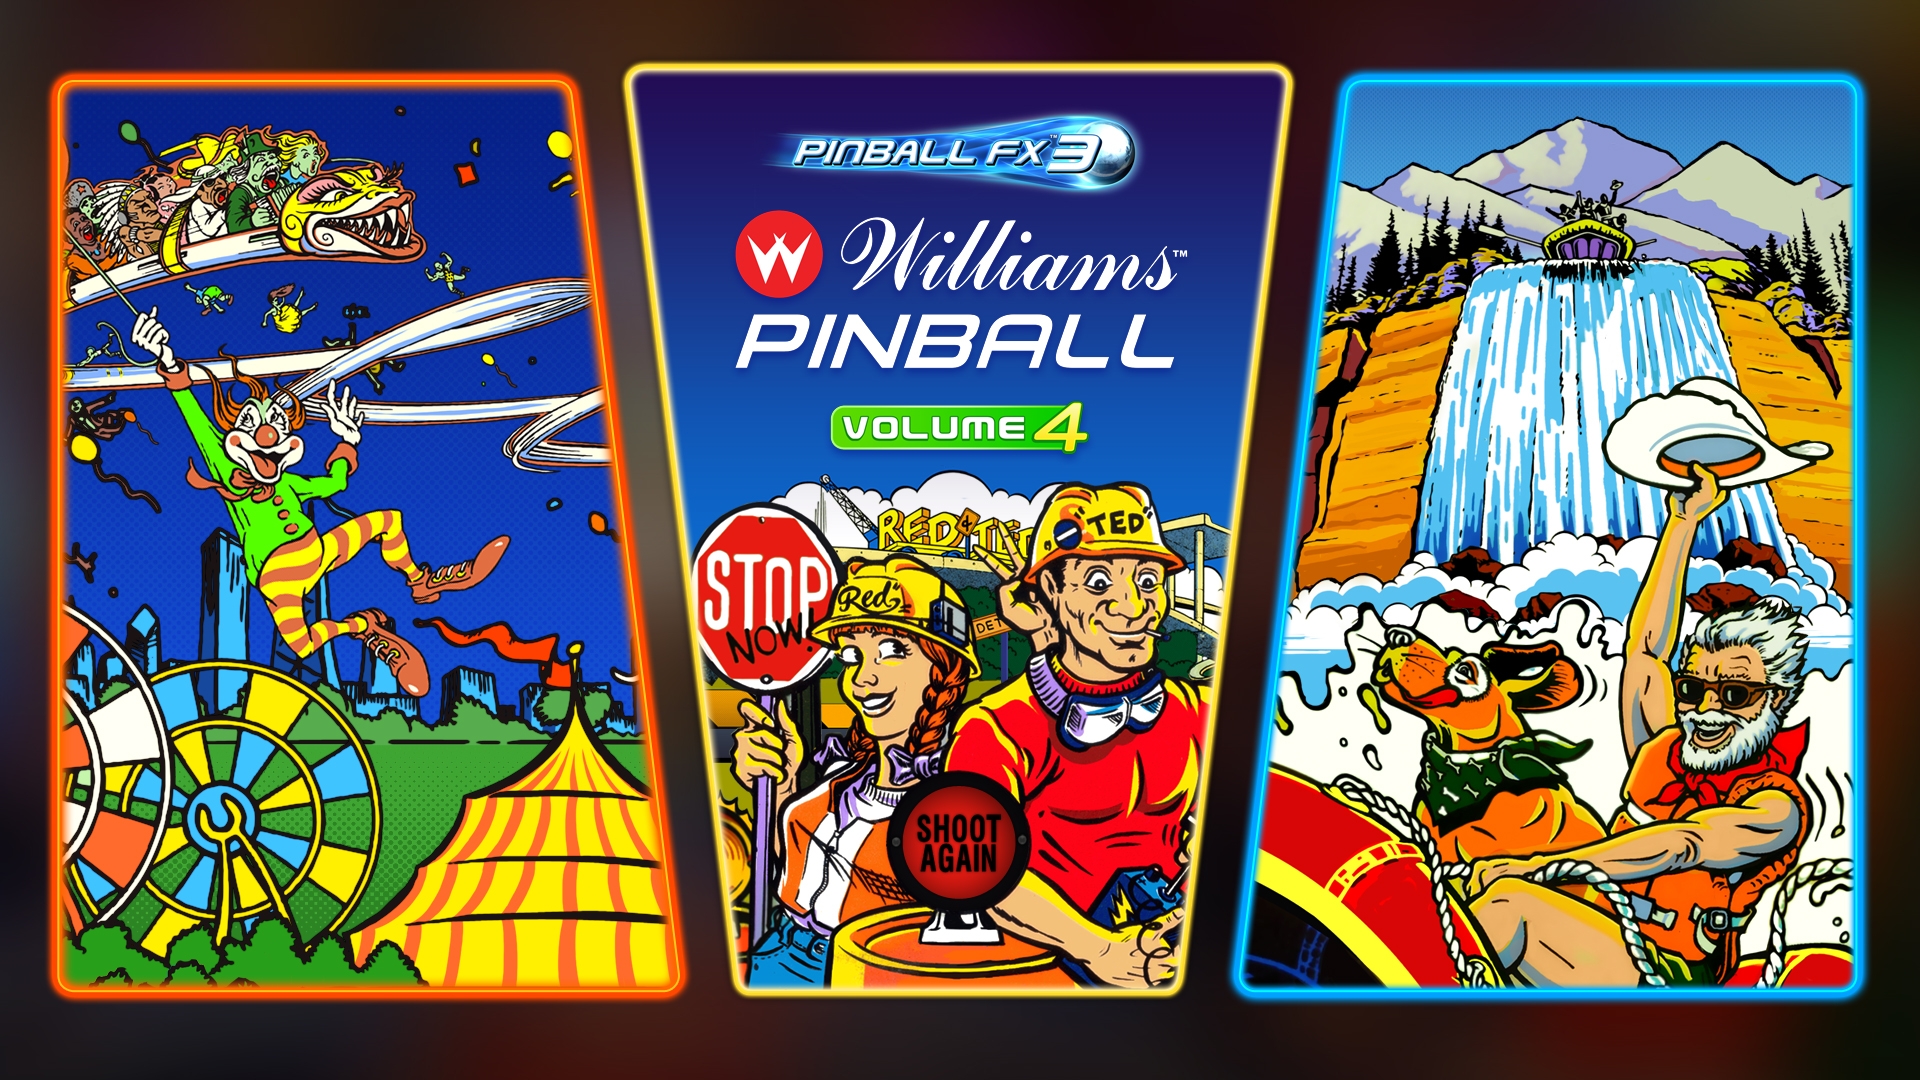 Pinball Fx3 Williams Pinball Volume 4 Pinball Fx3 Nintendo Switch Nintendo